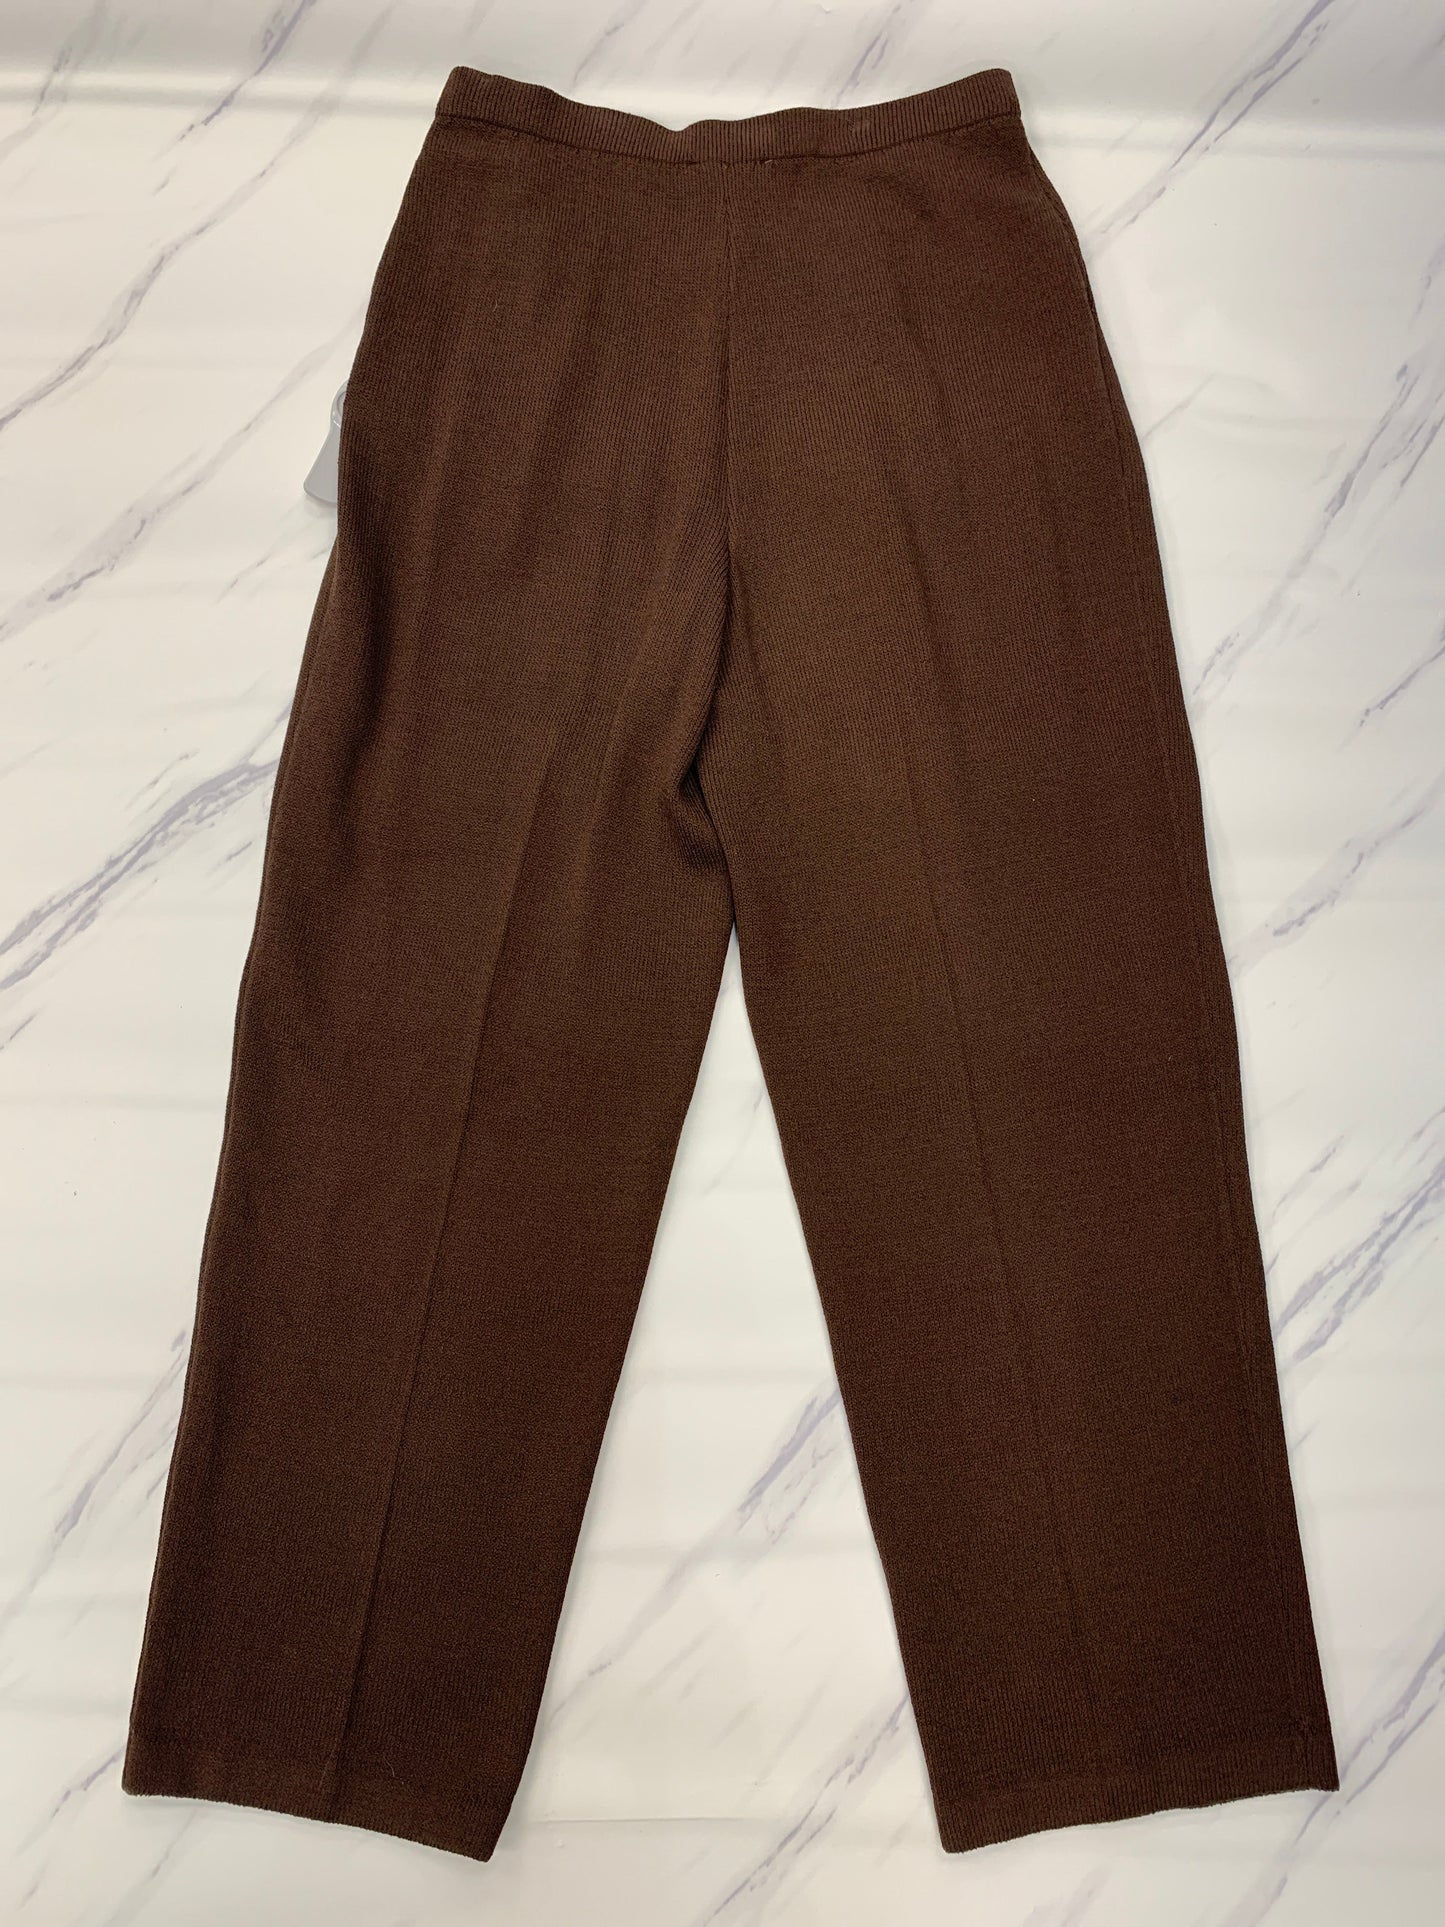 Brown Pants Designer St John Collection, Size 12